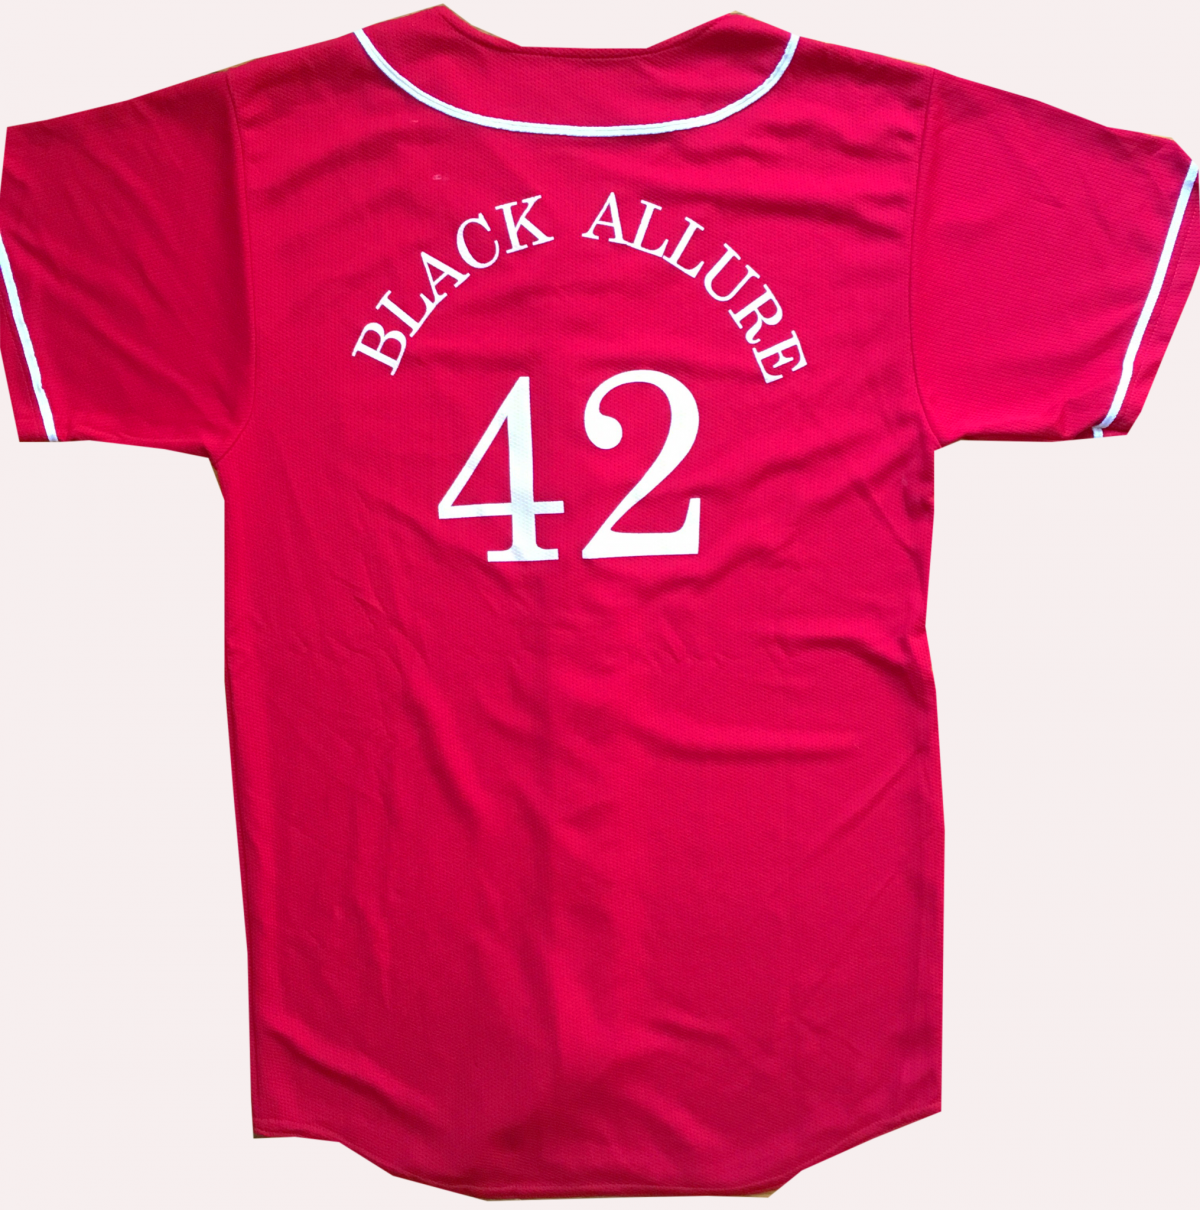 Black Allure Baseball Jersey Red
